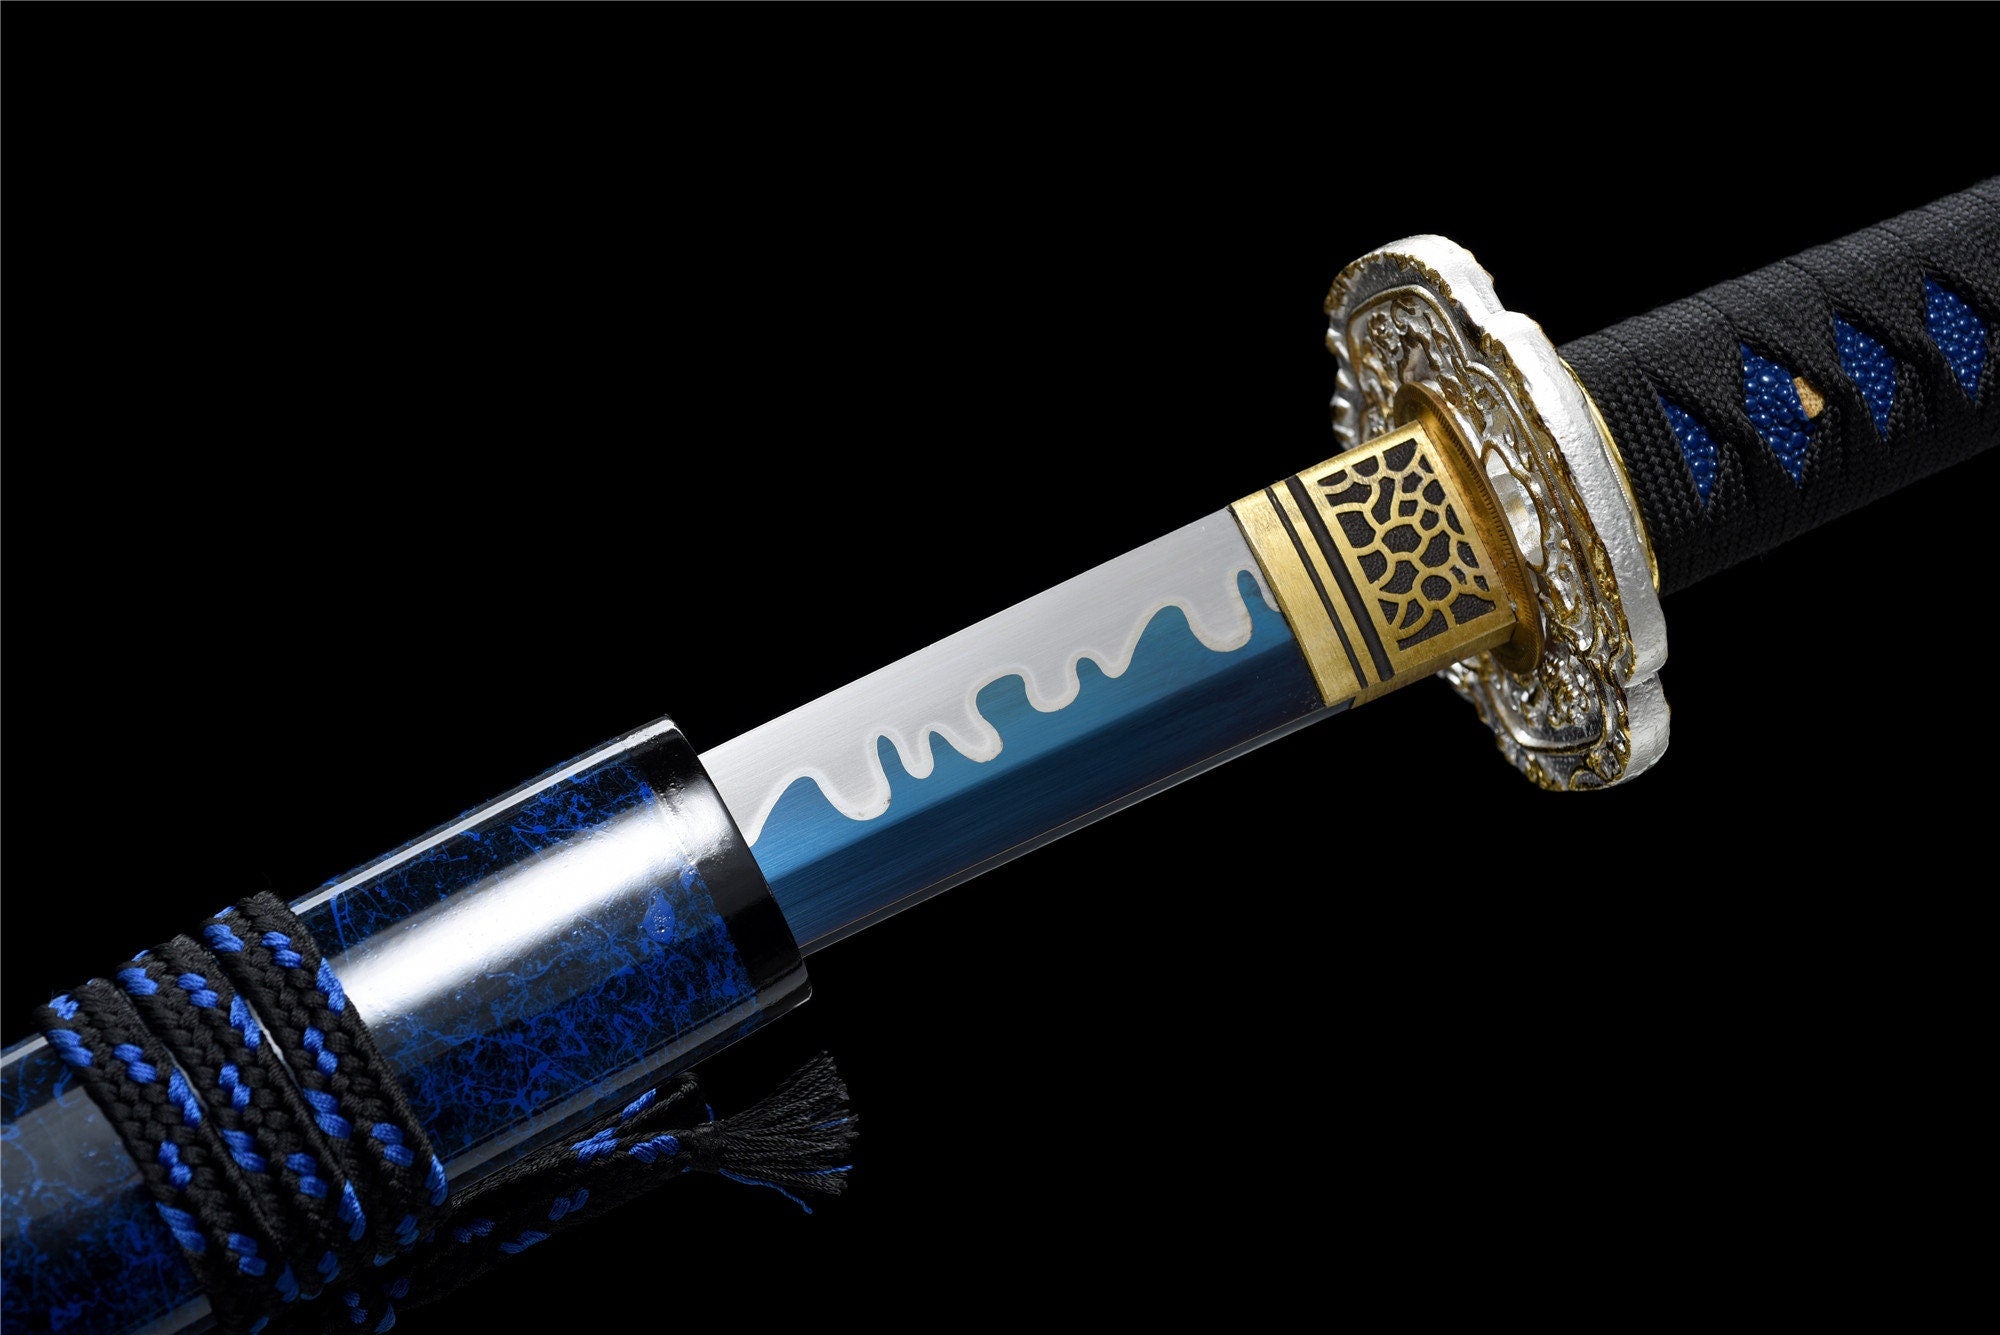 wakizashi sword